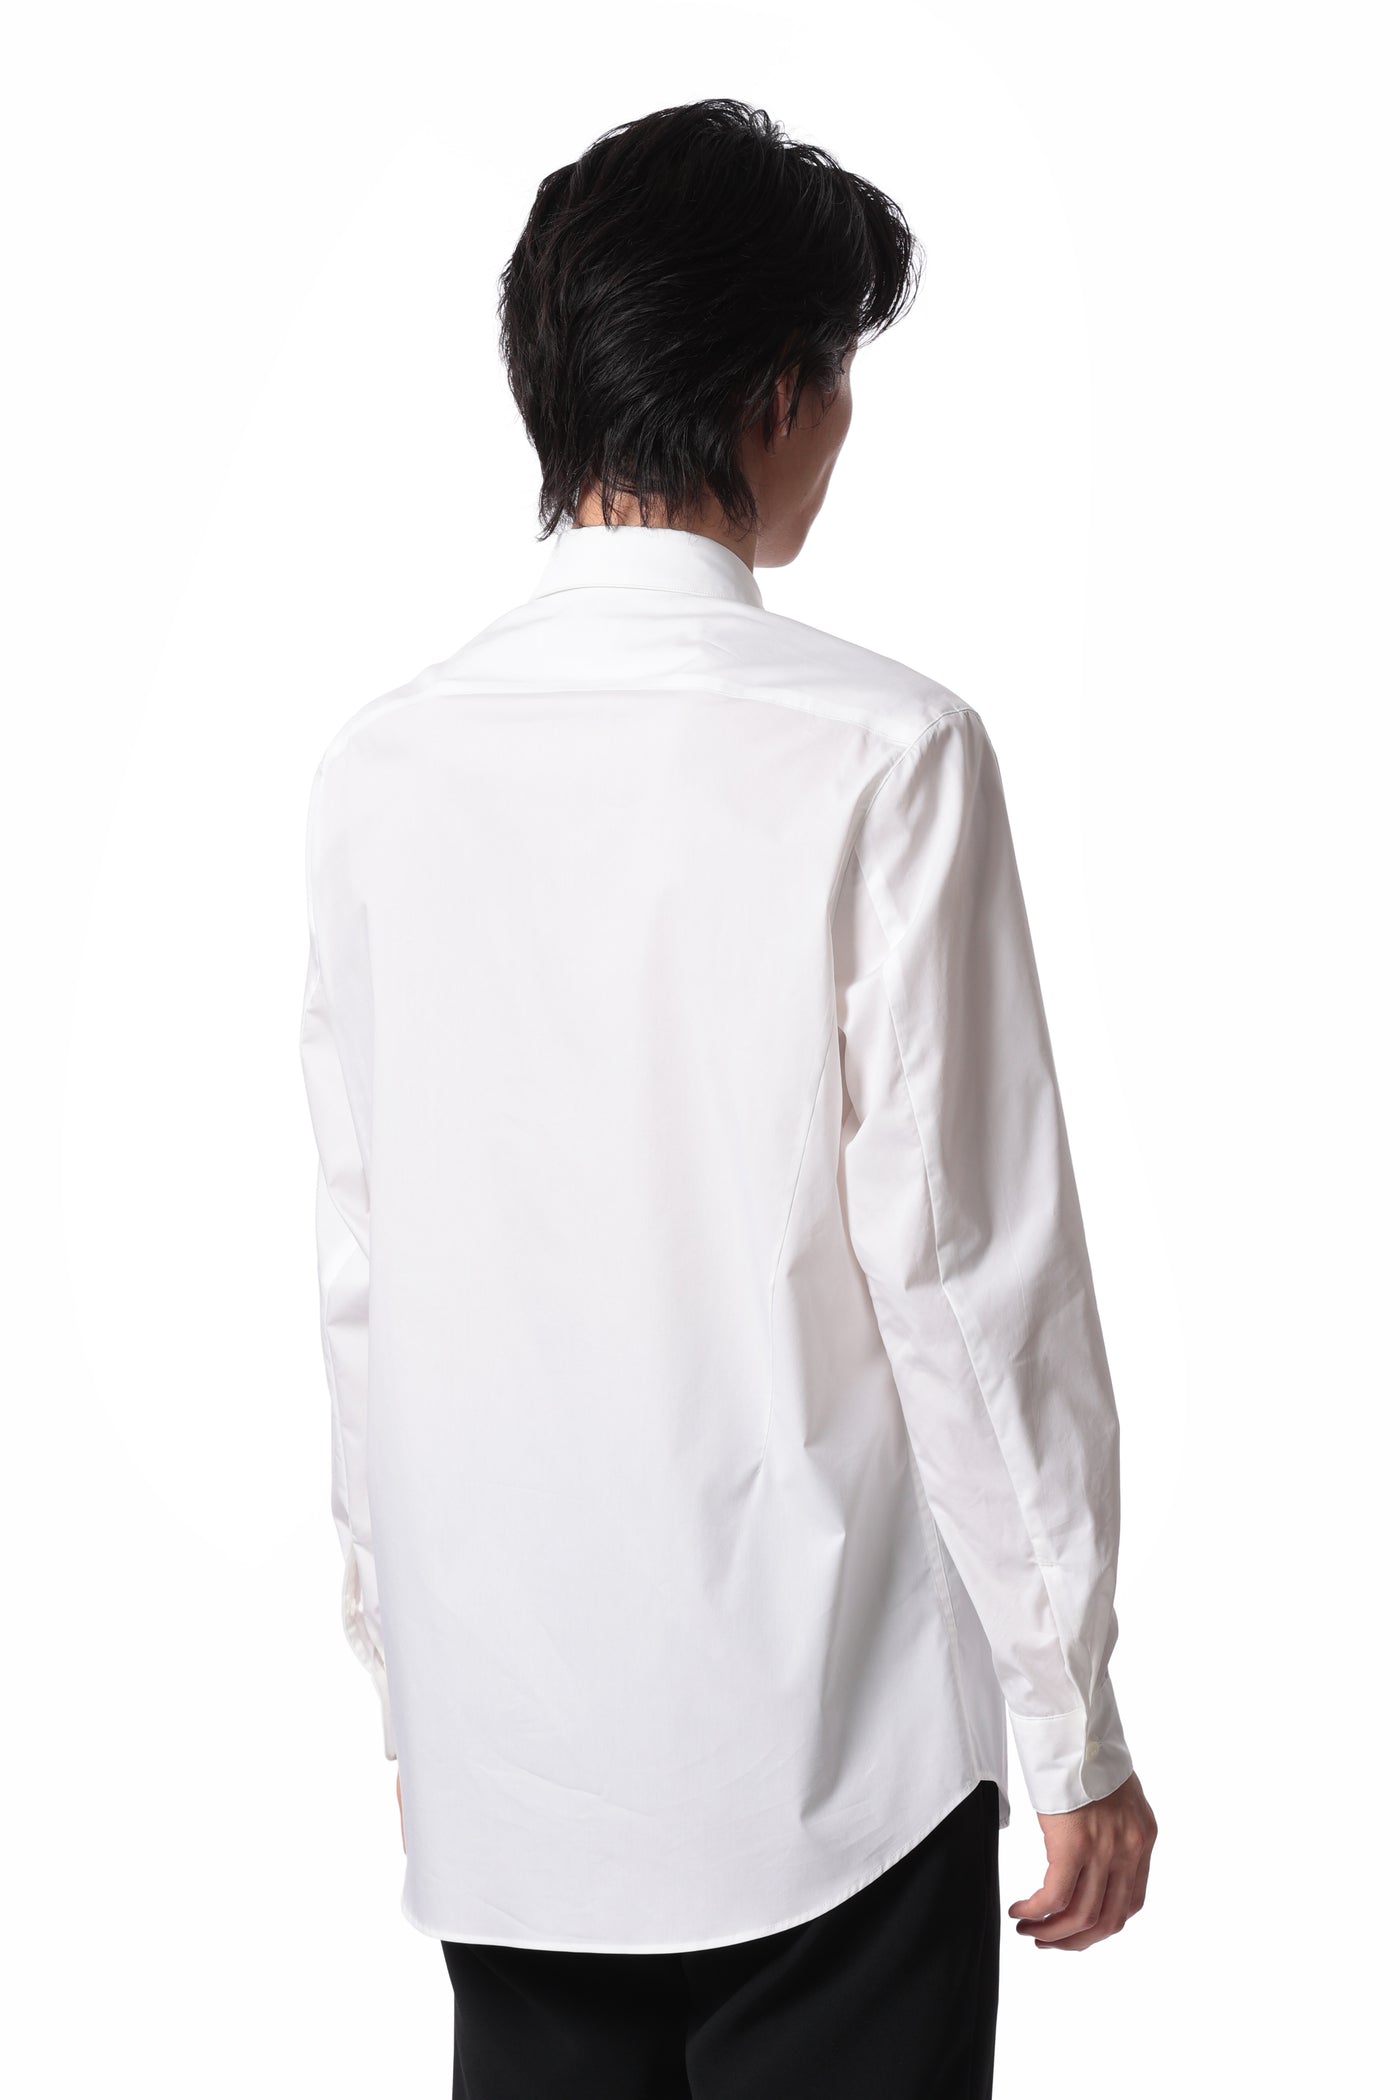 AS41-054 Cotton/Polyester Stretch Typewriter Dress Shirt